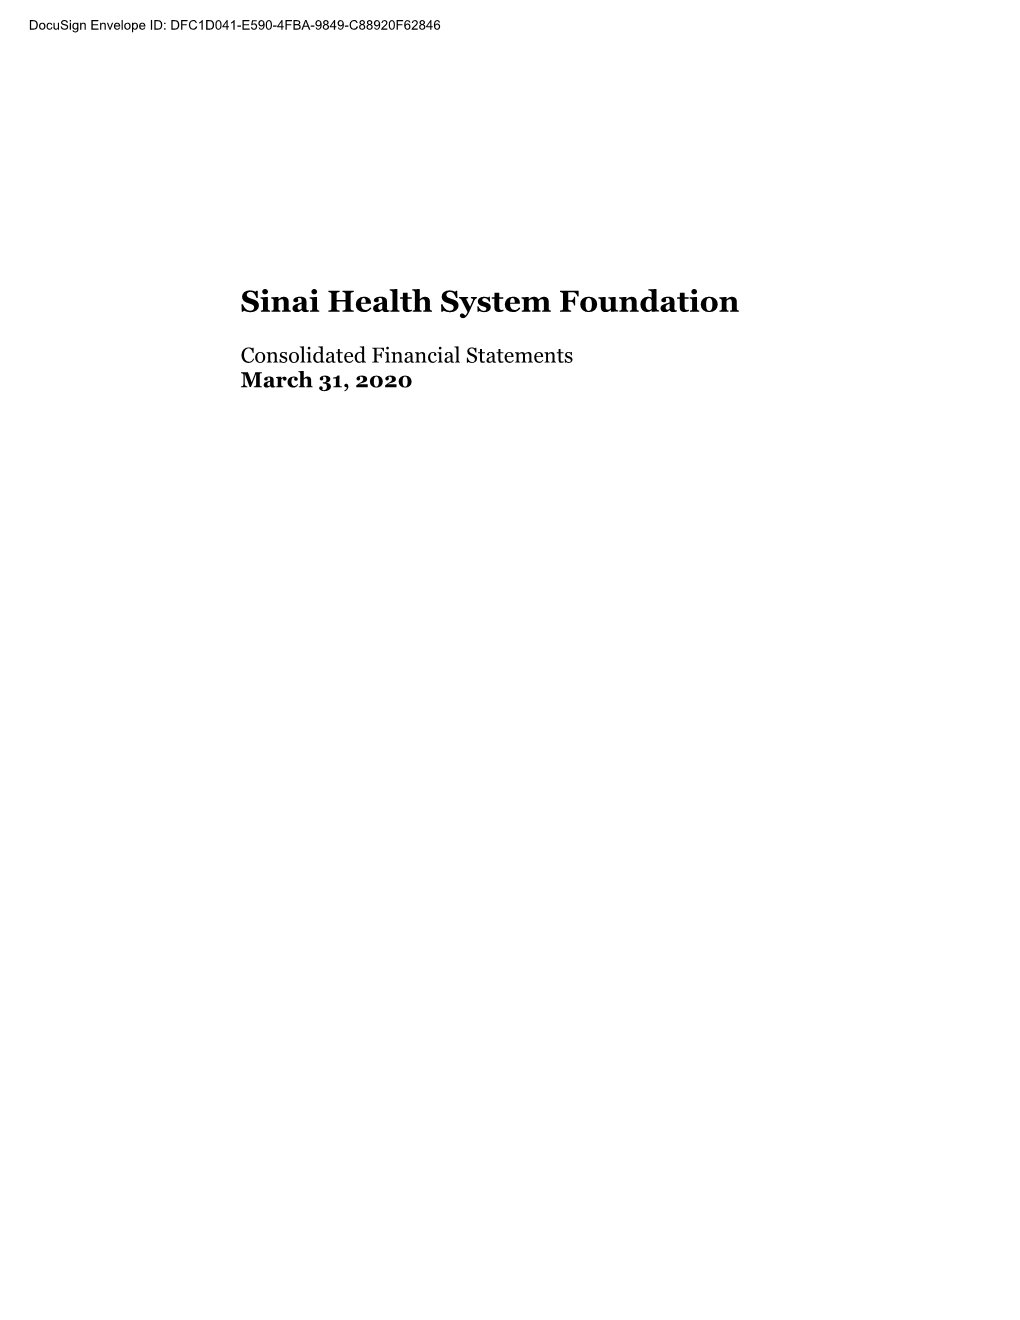 Sinai Health System Foundation